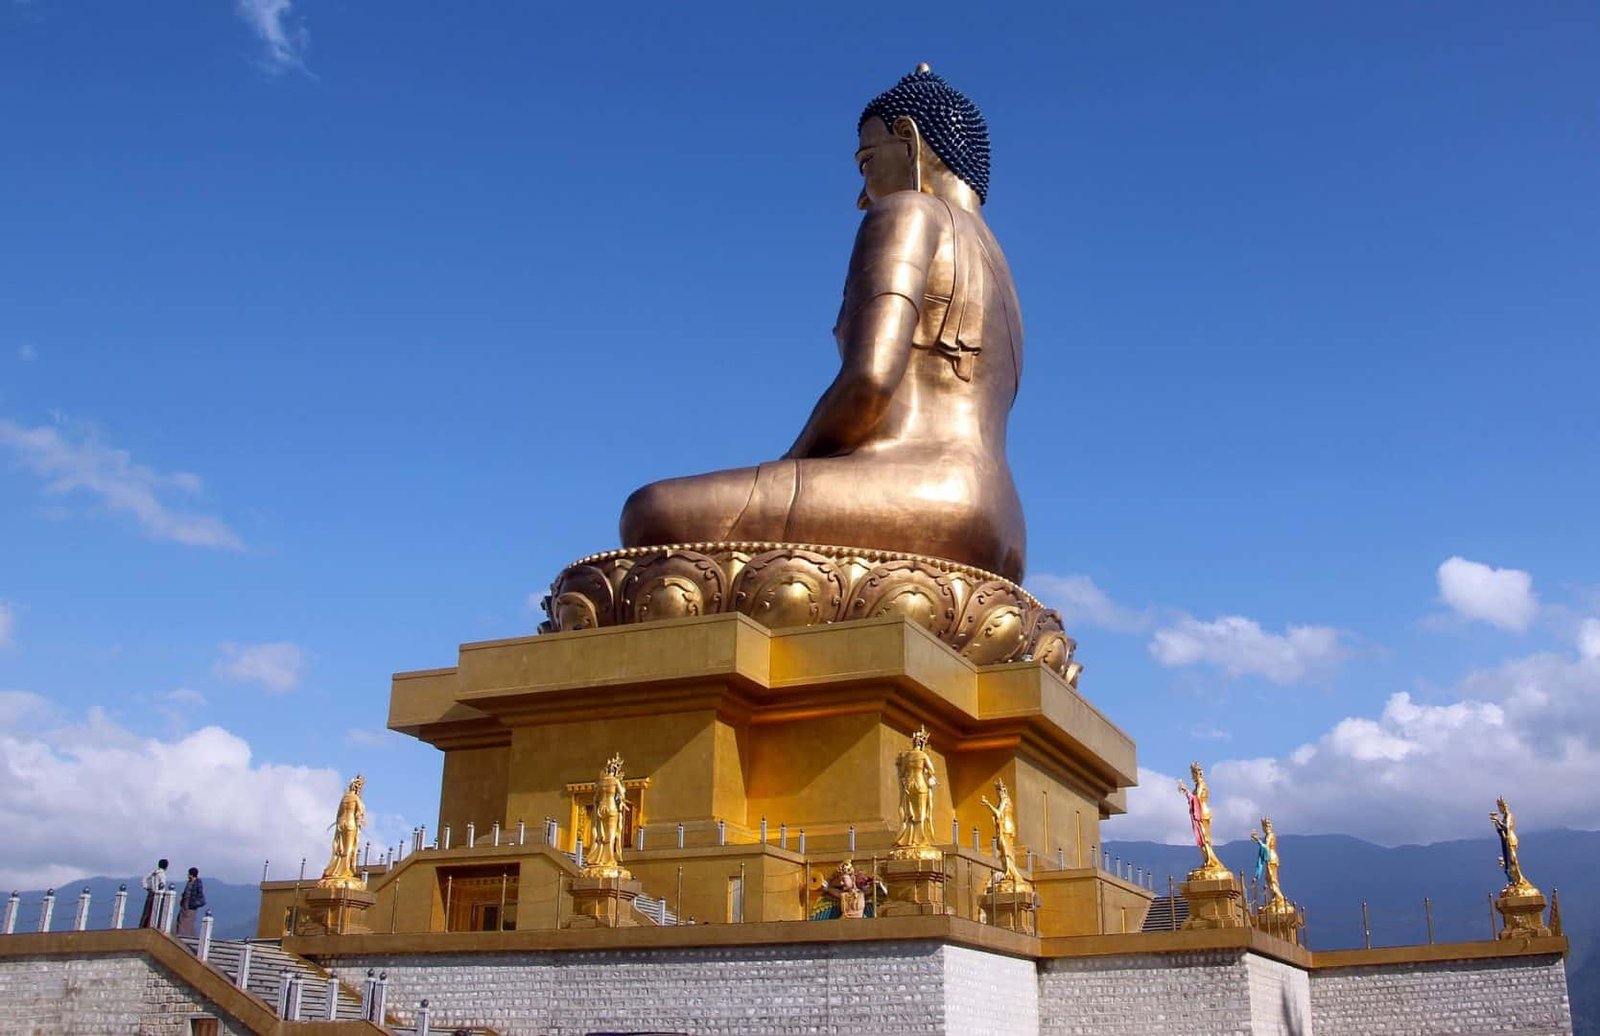 Buddha Point Thimpu